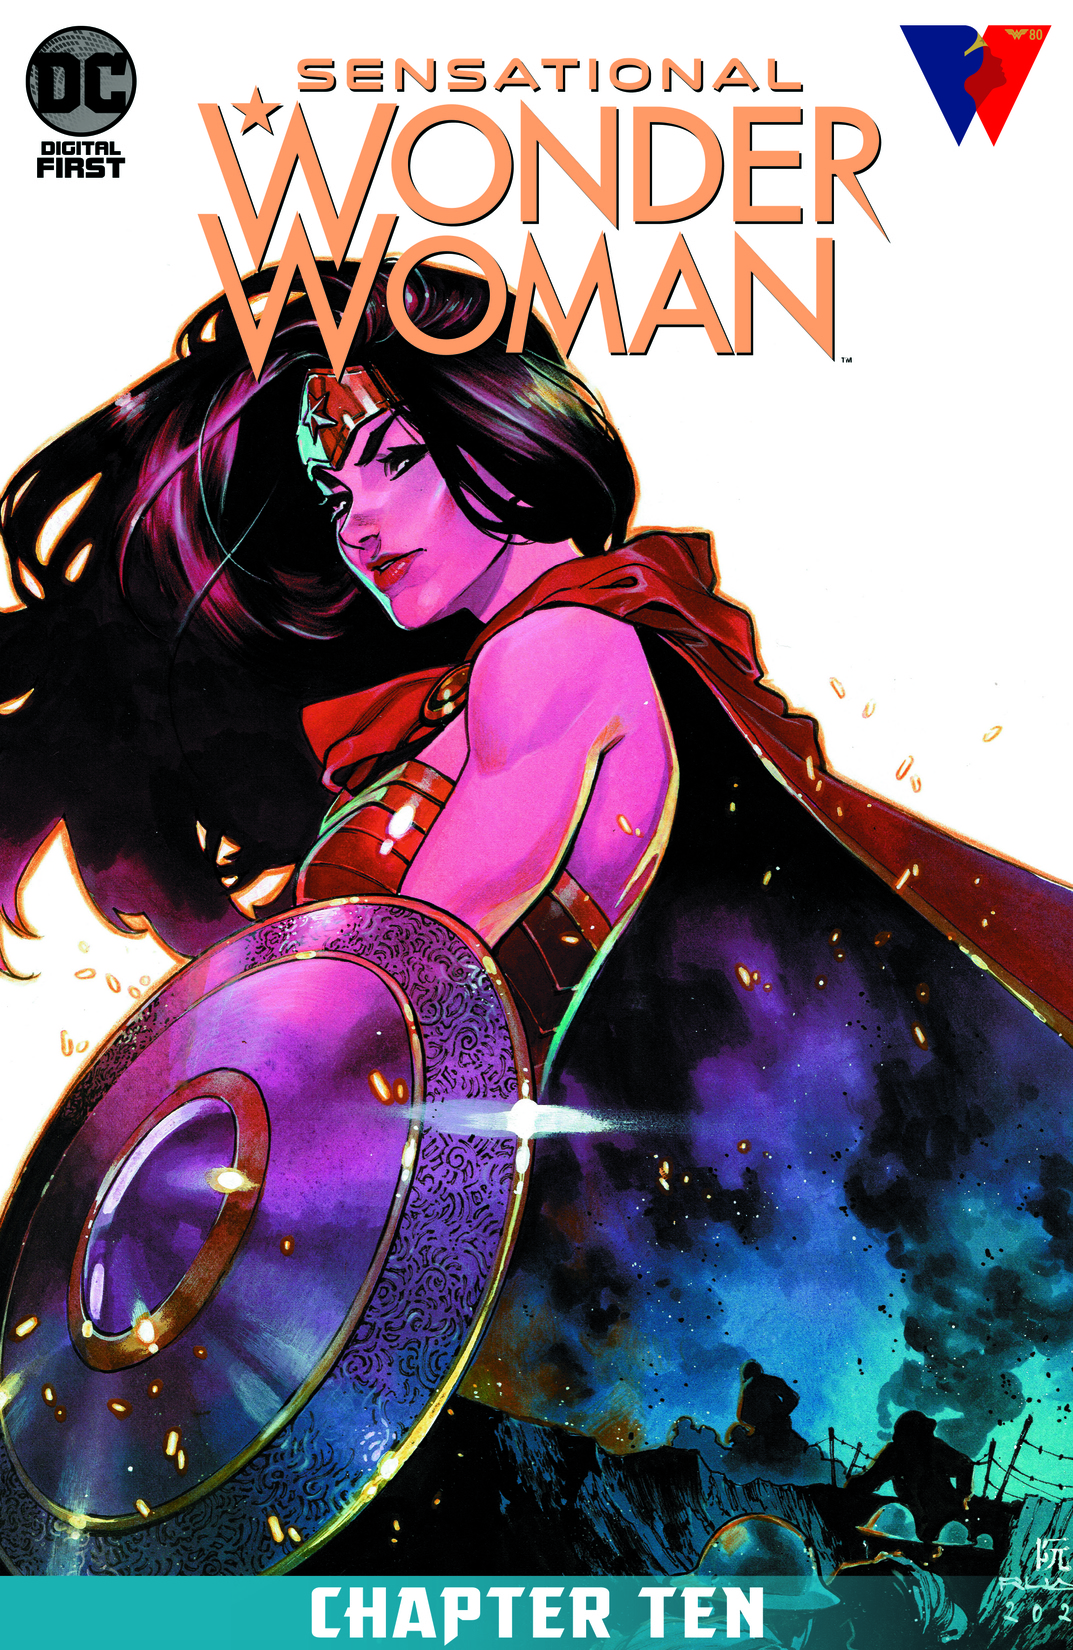 Sensational Wonder Woman #10 preview images